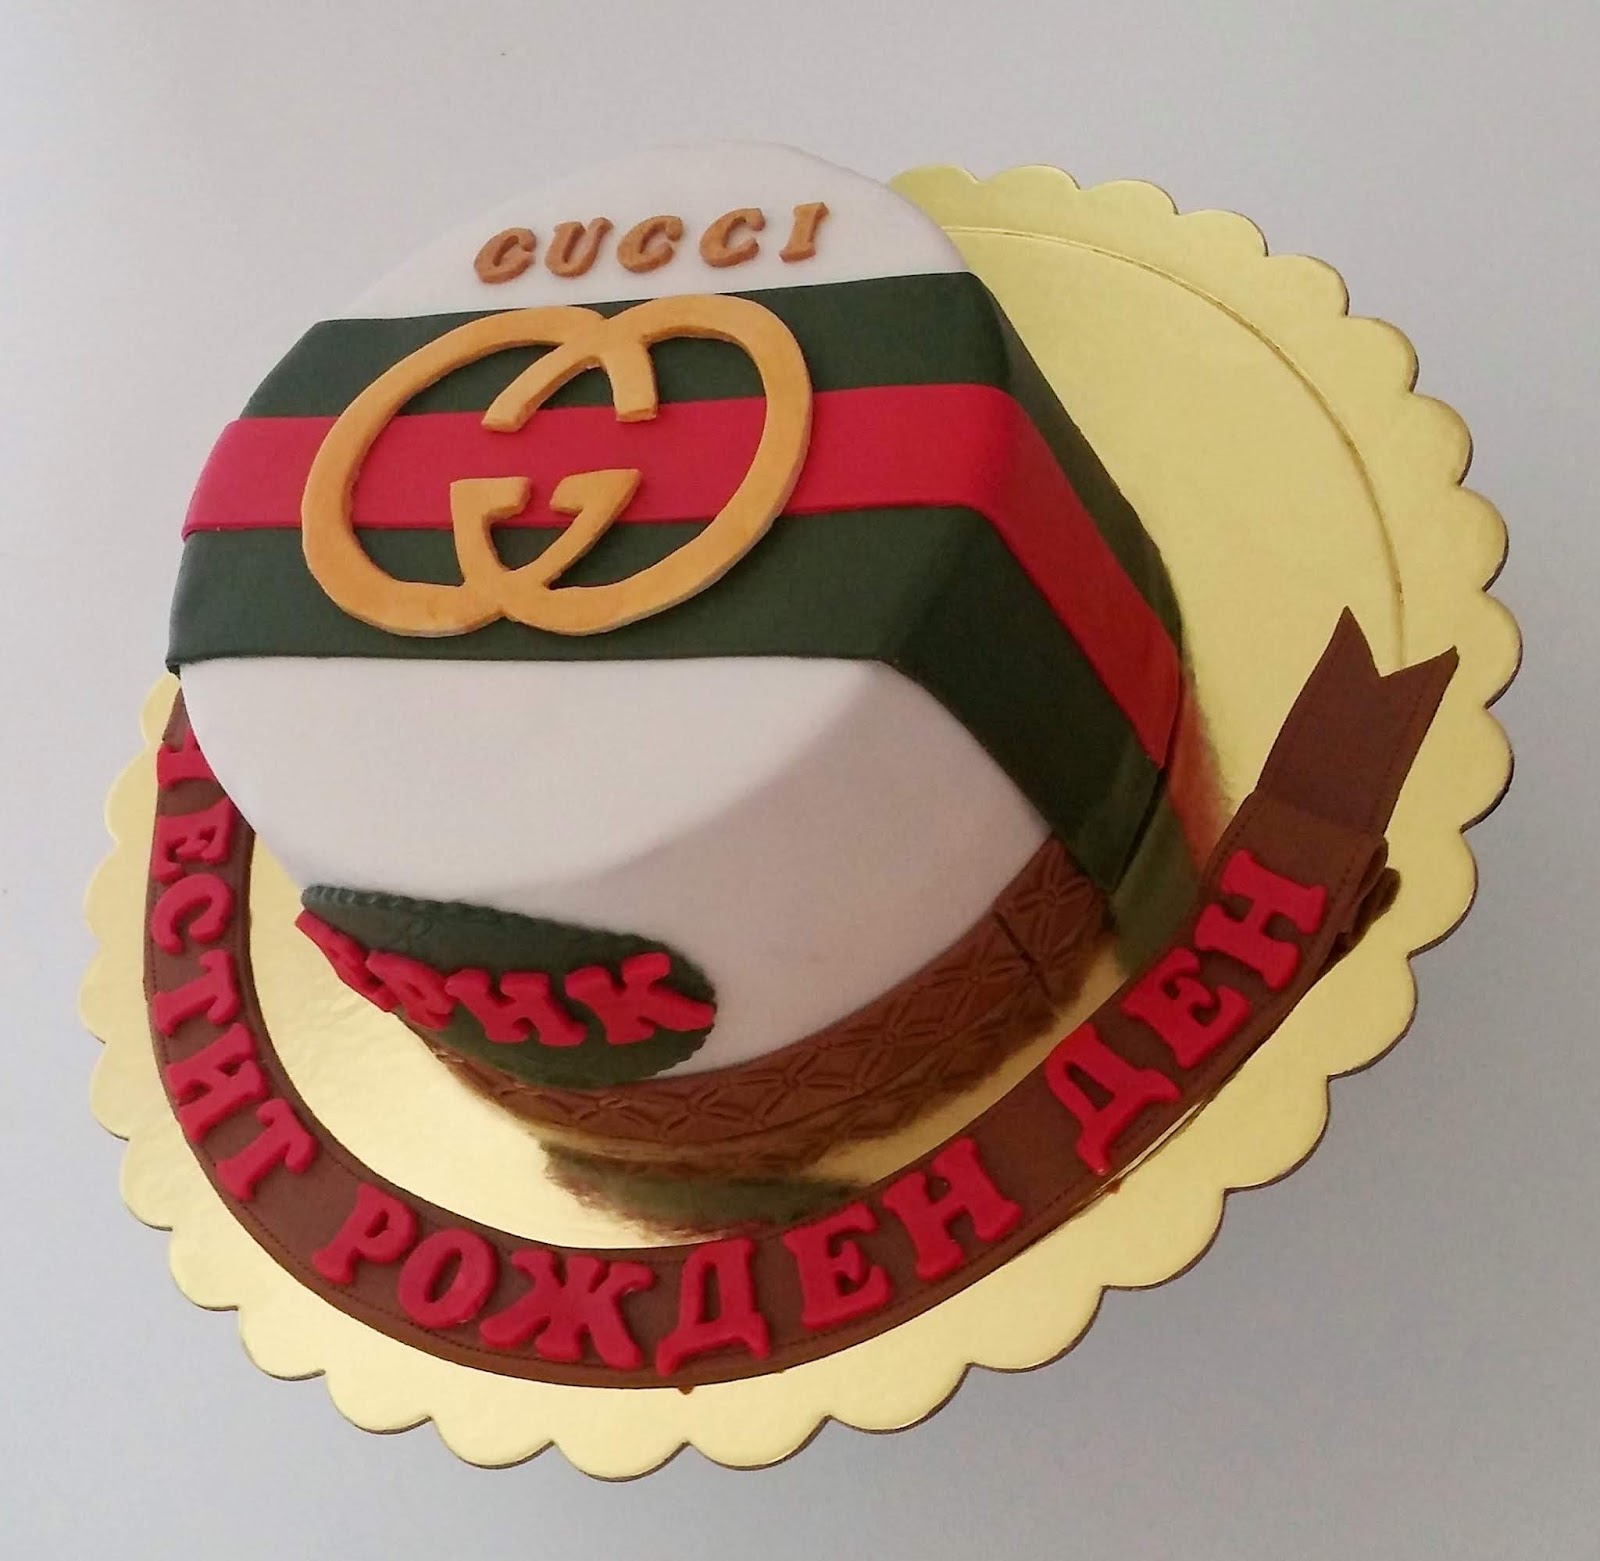 gucci logo cake